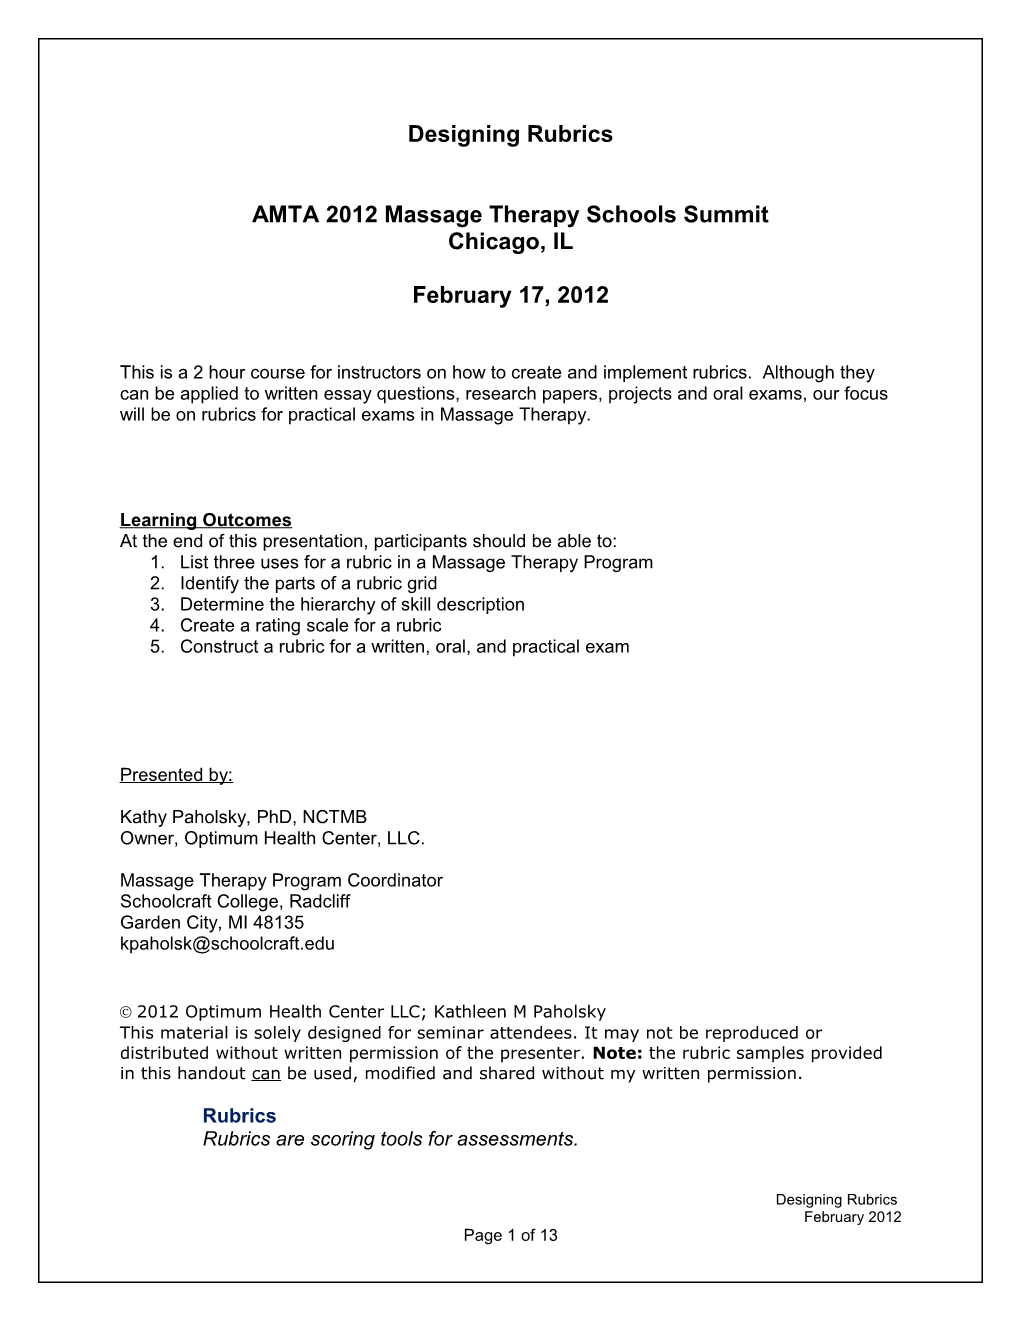 AMTA 2012 Massage Therapy Schools Summit